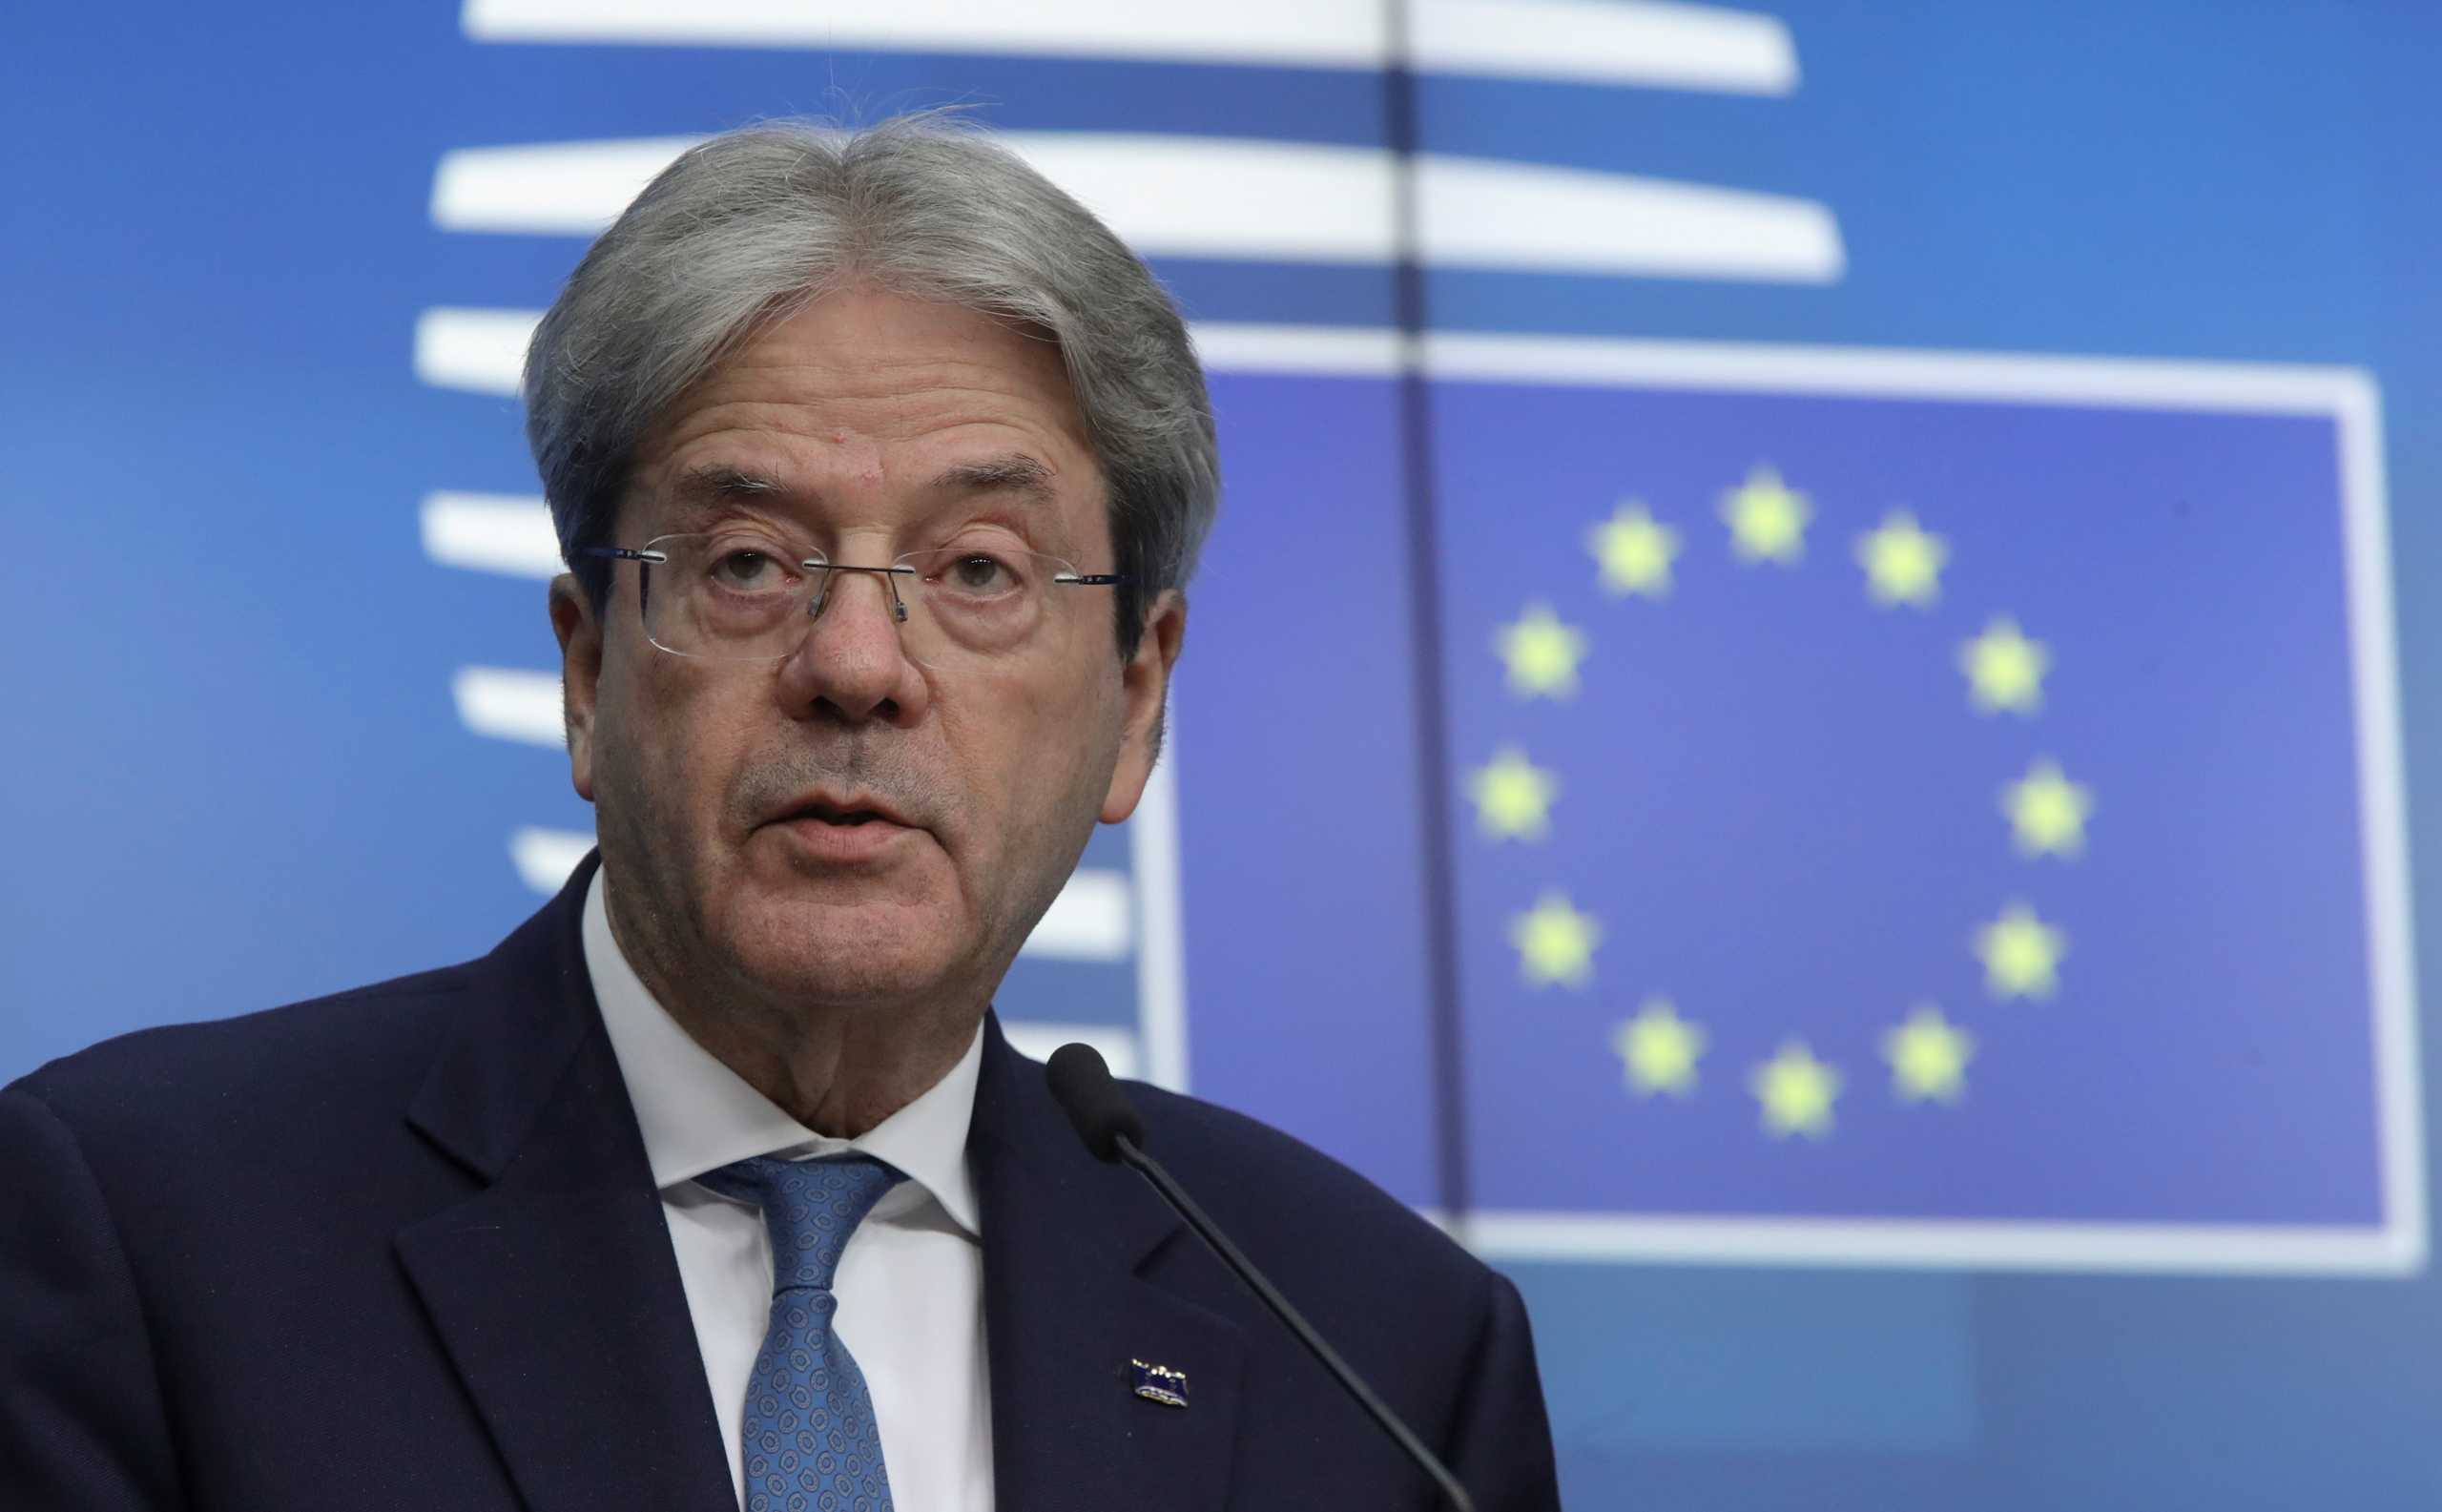 Eurogroup: Σημαντική πρόοδος της Ελλάδας σε μεταρρυθμίσεις